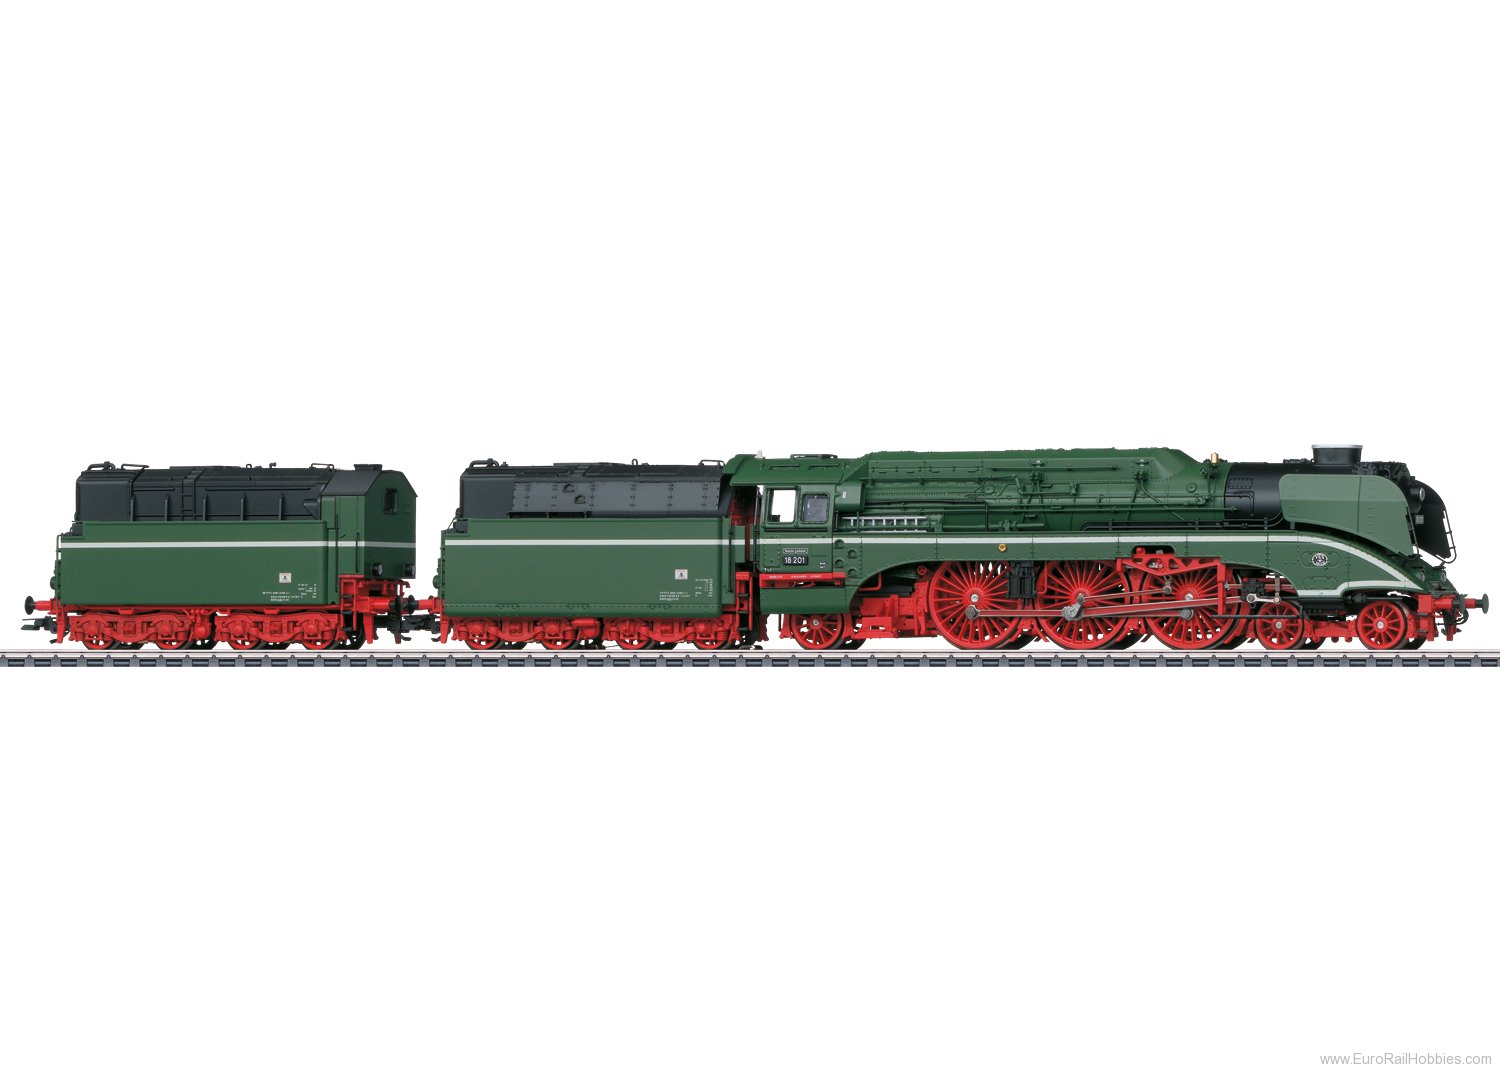 Marklin 38201 GDR Steam Locomotive, Road Number 18 201 (Mar